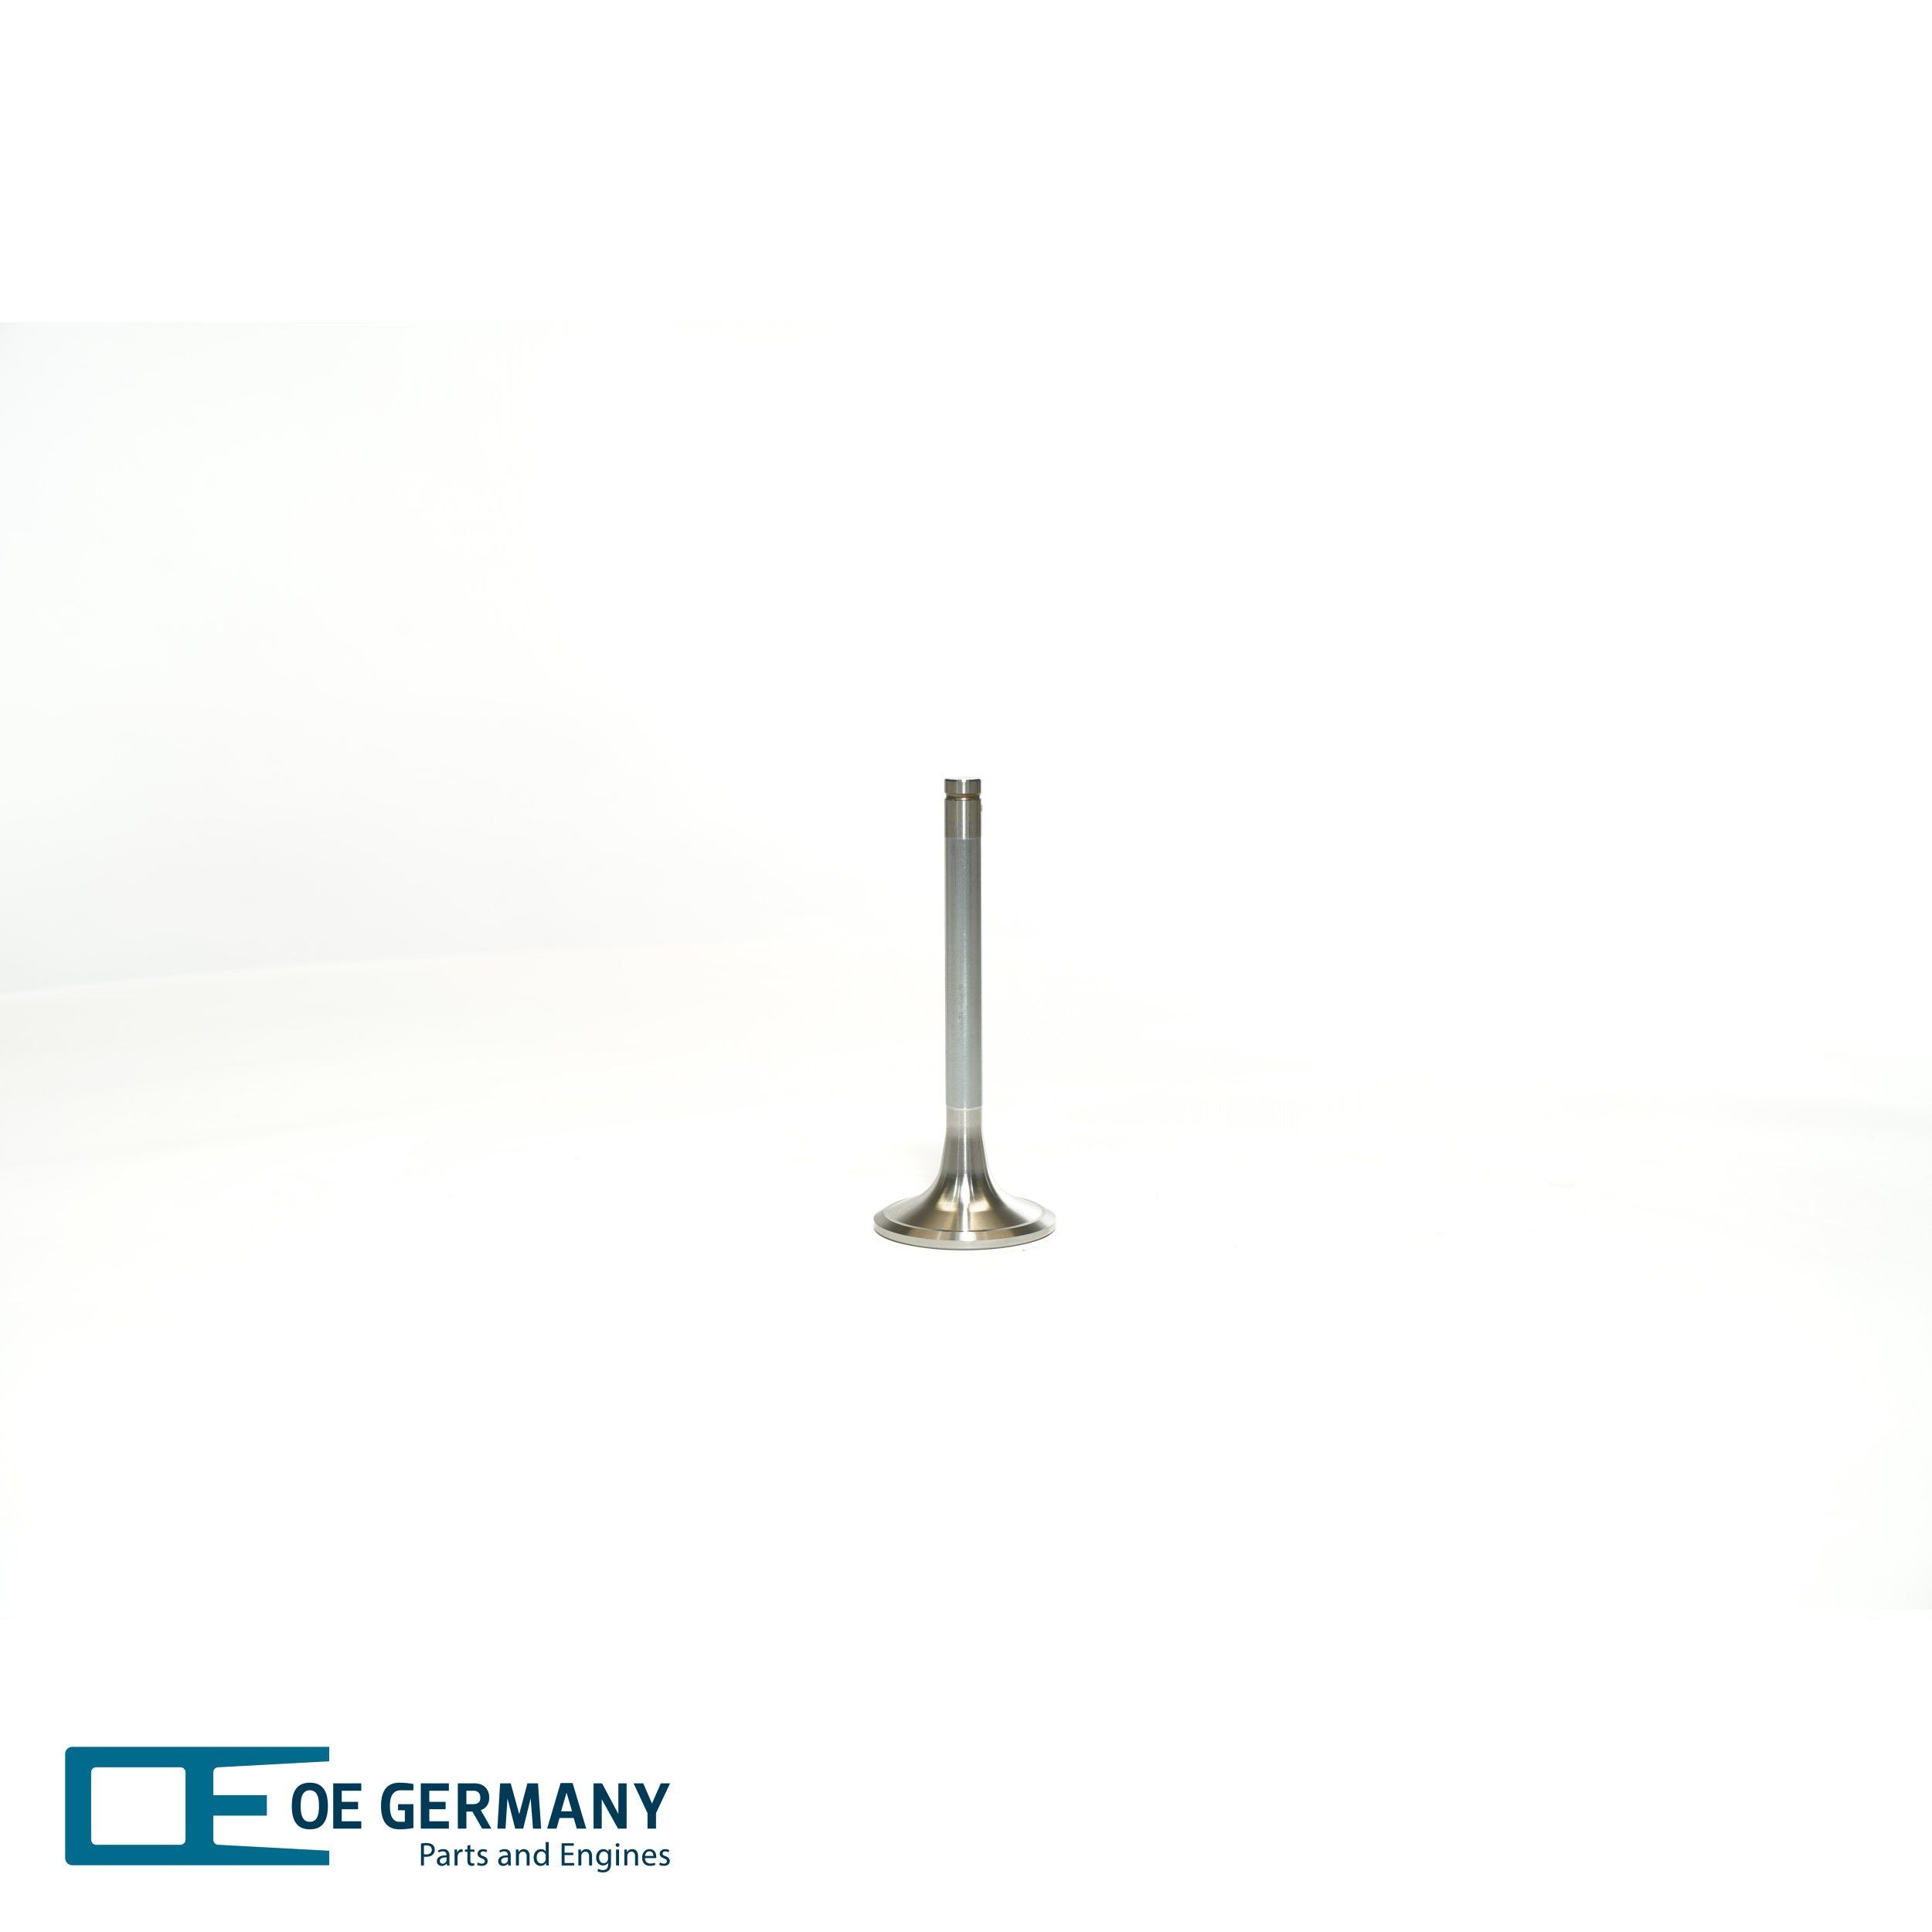 OE Germany Intake valves 02 0520 280000